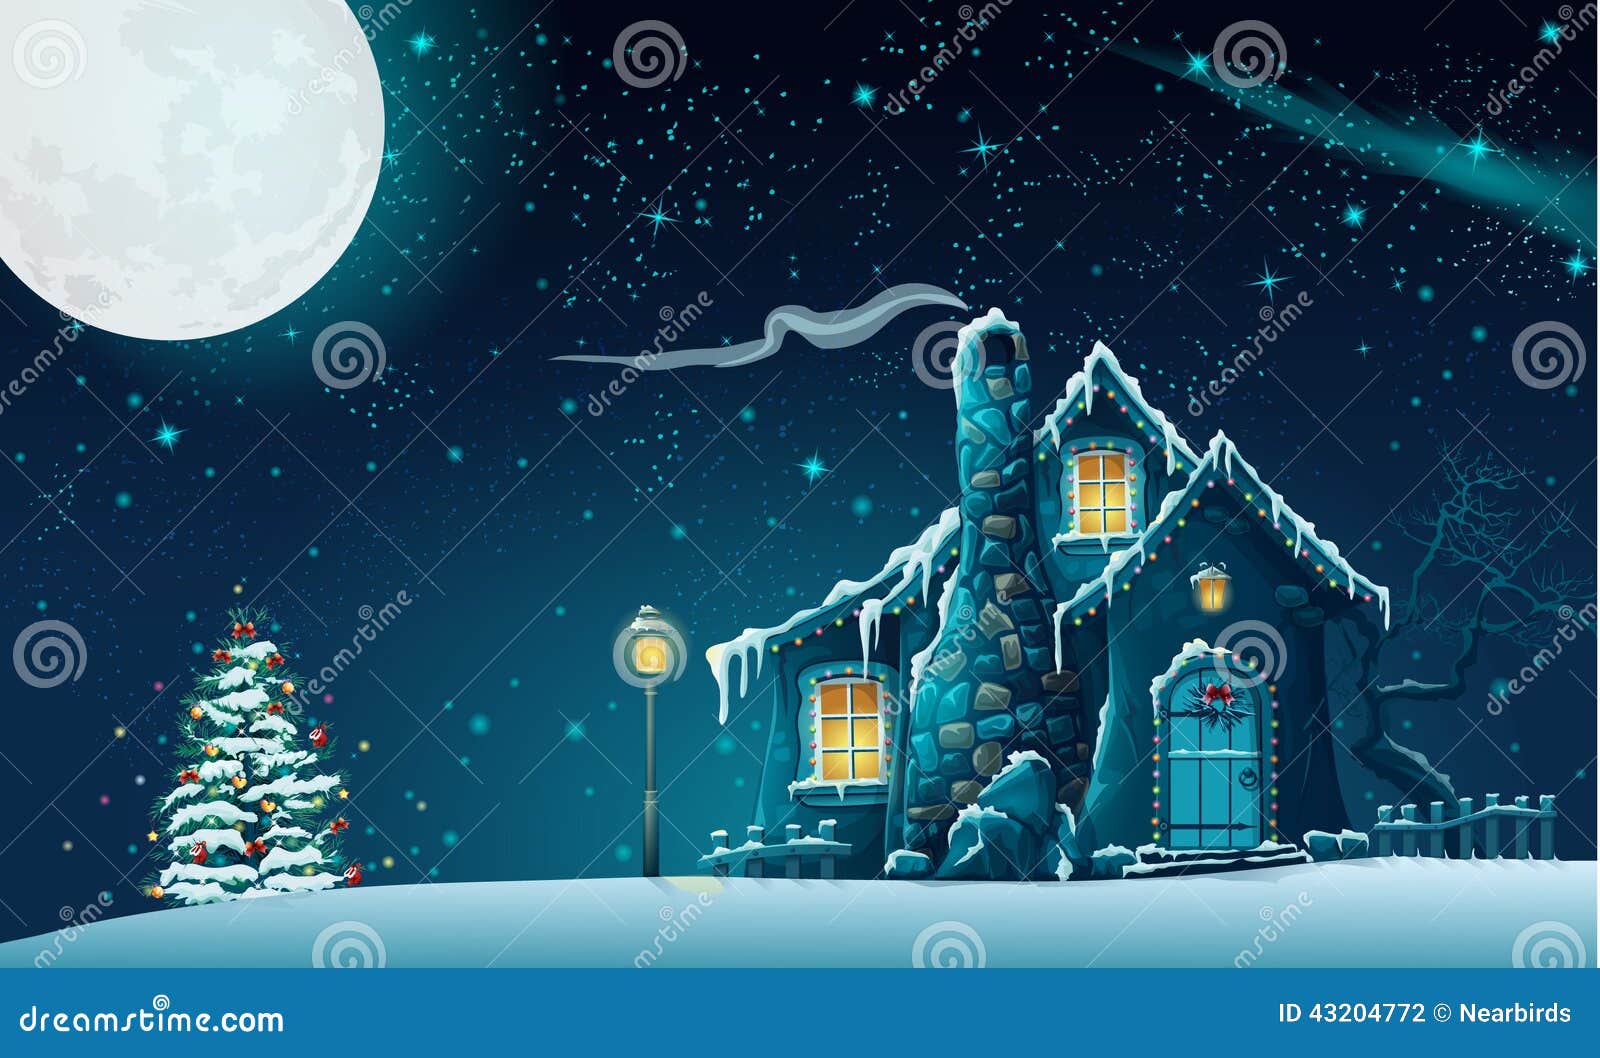 christmas night with a fabulous house and a christmas tree